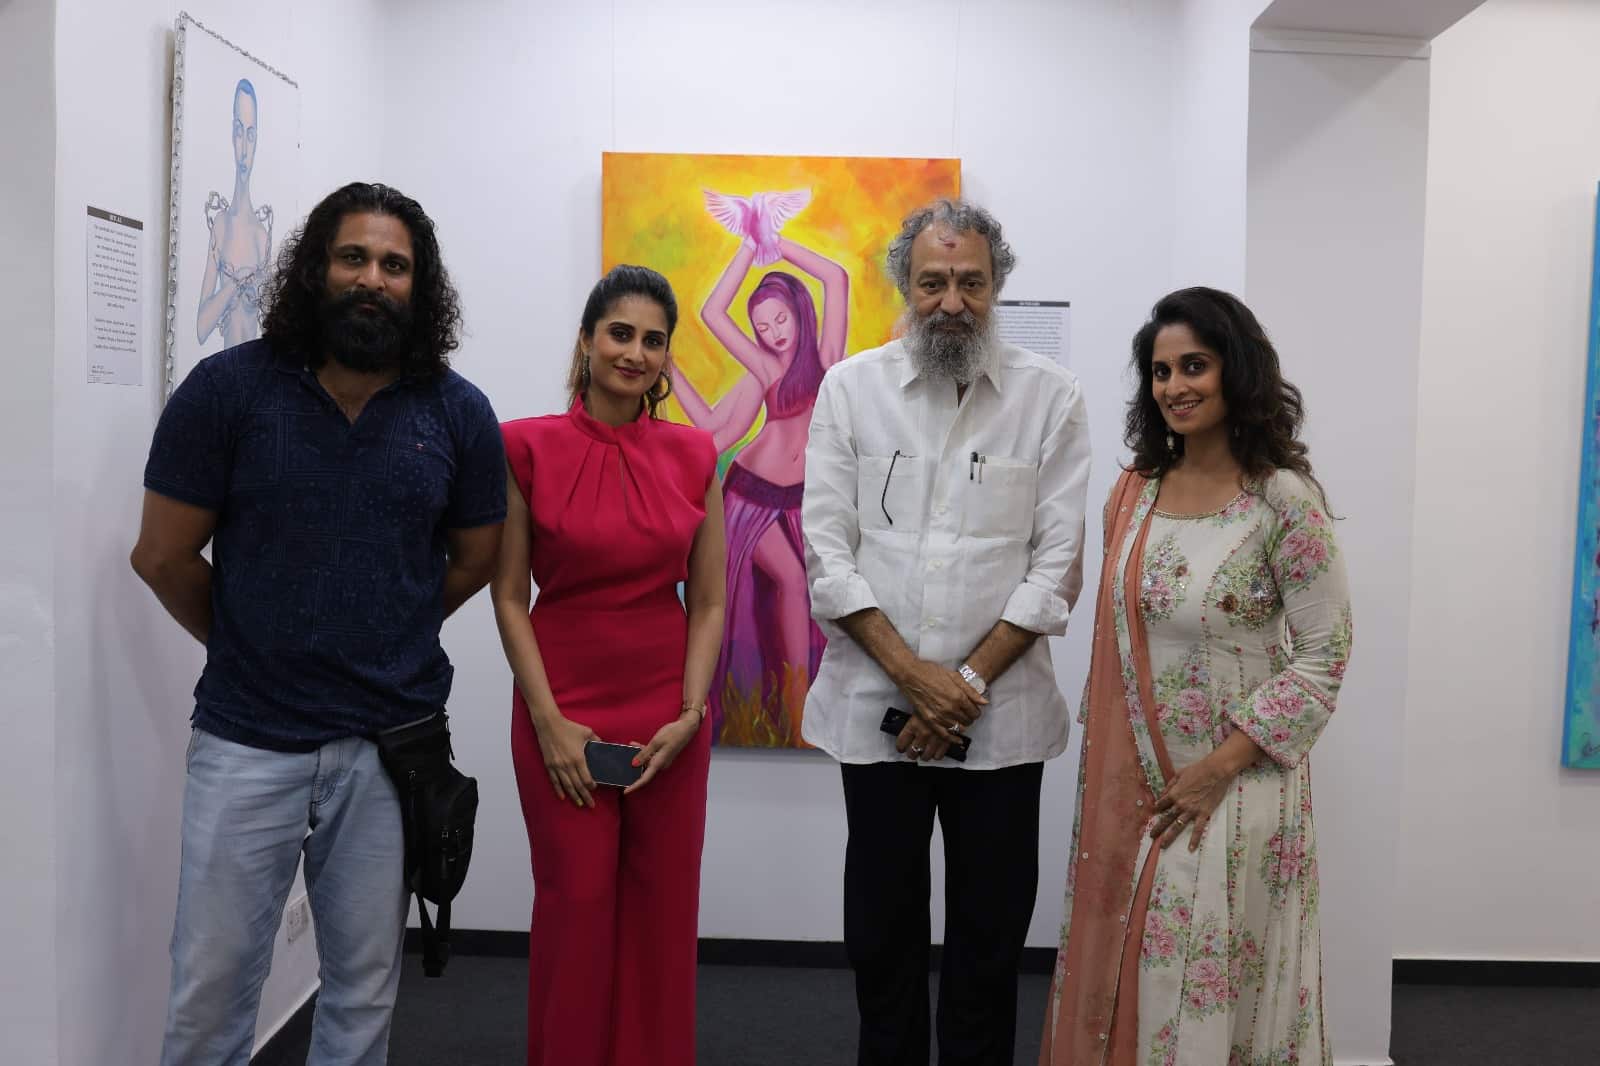 Richard, Shamlee, Thota Tharani and Shalini